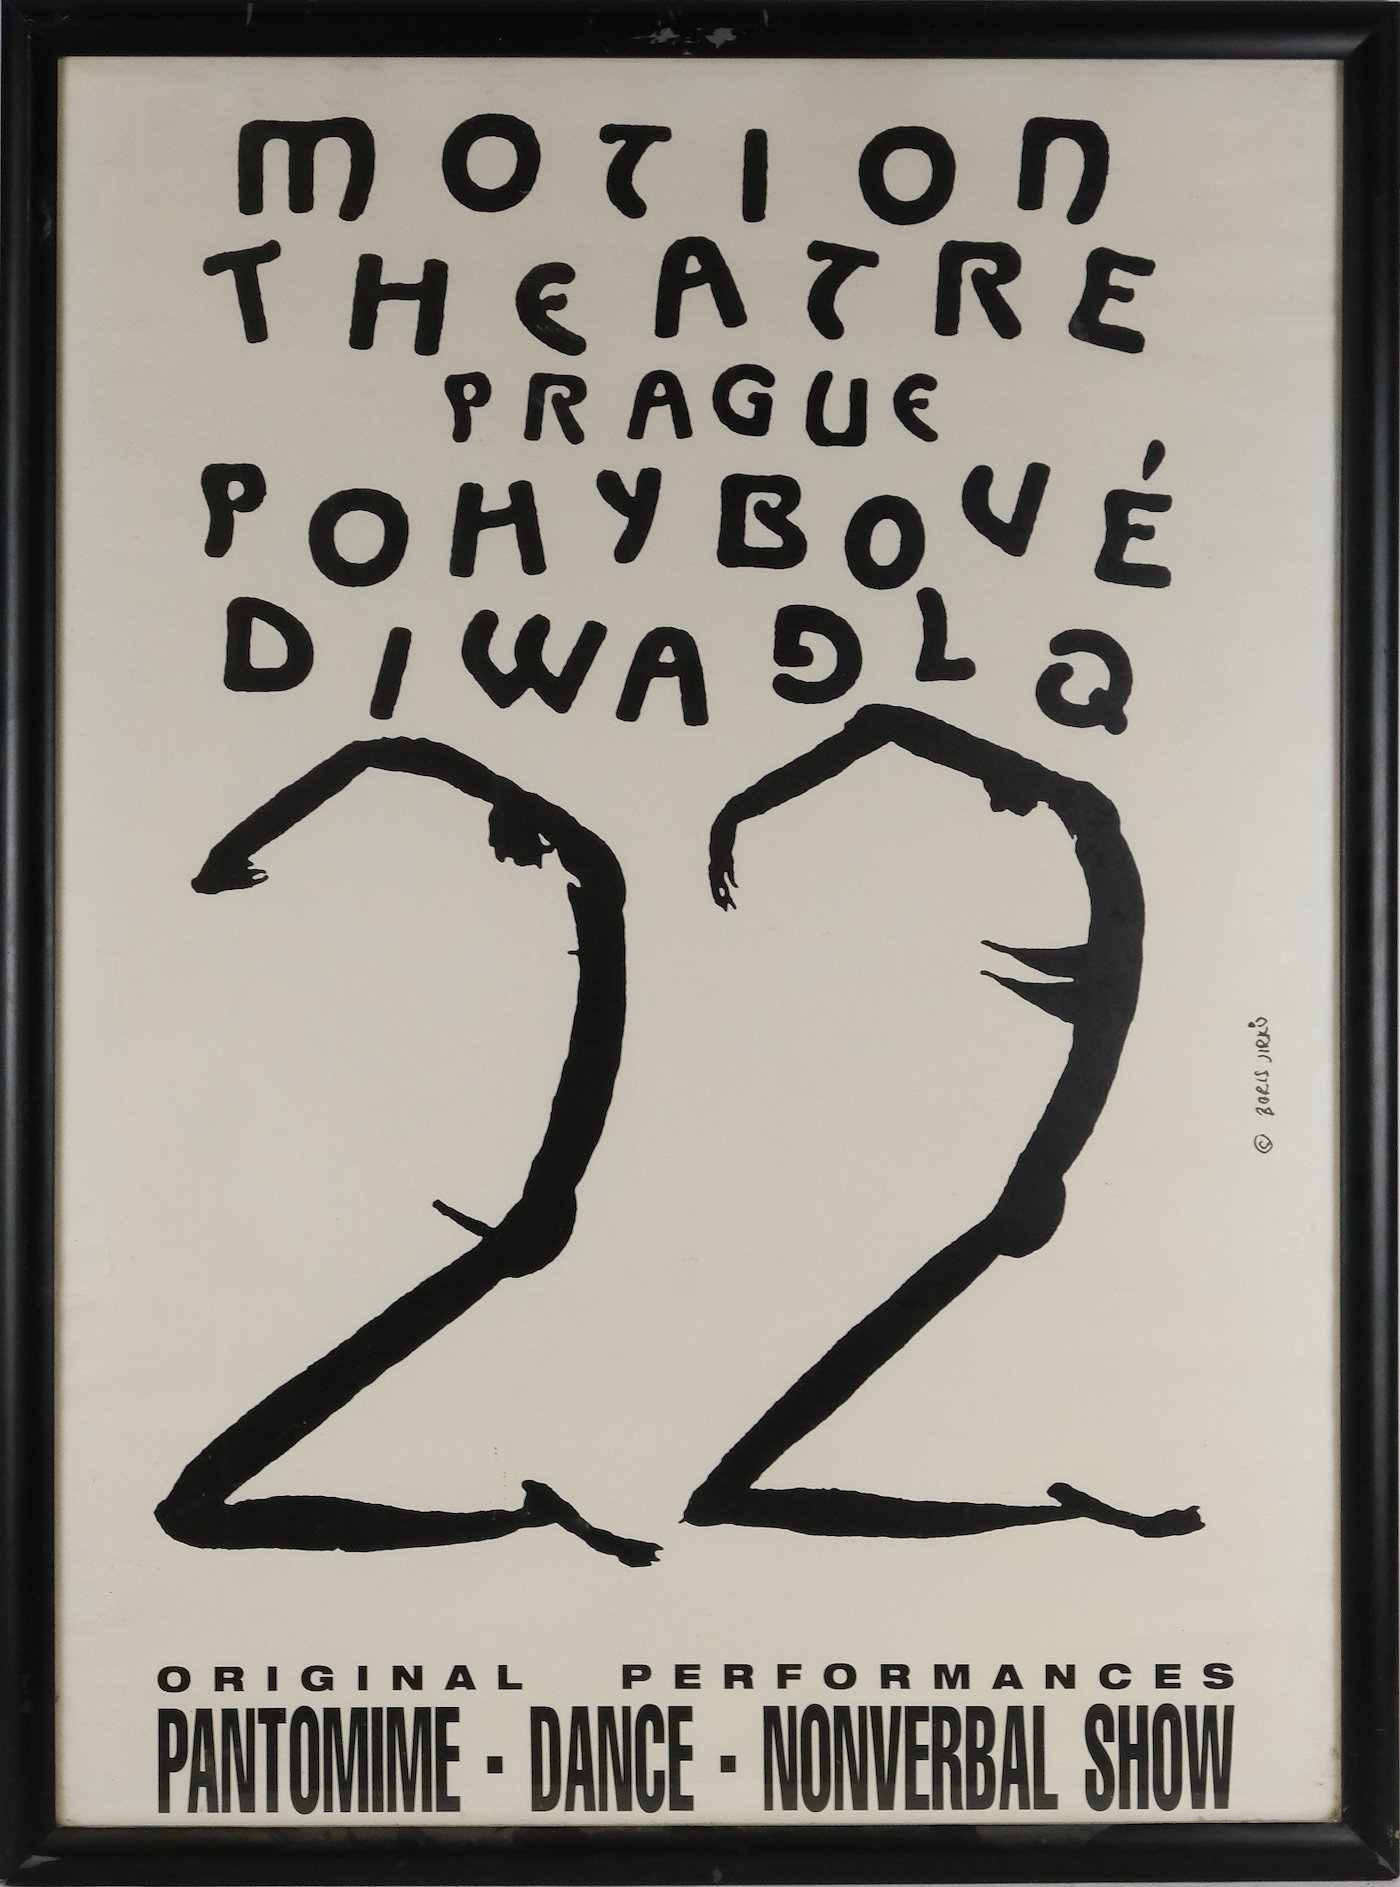 Boris Jirků - Motion Theatre Prague